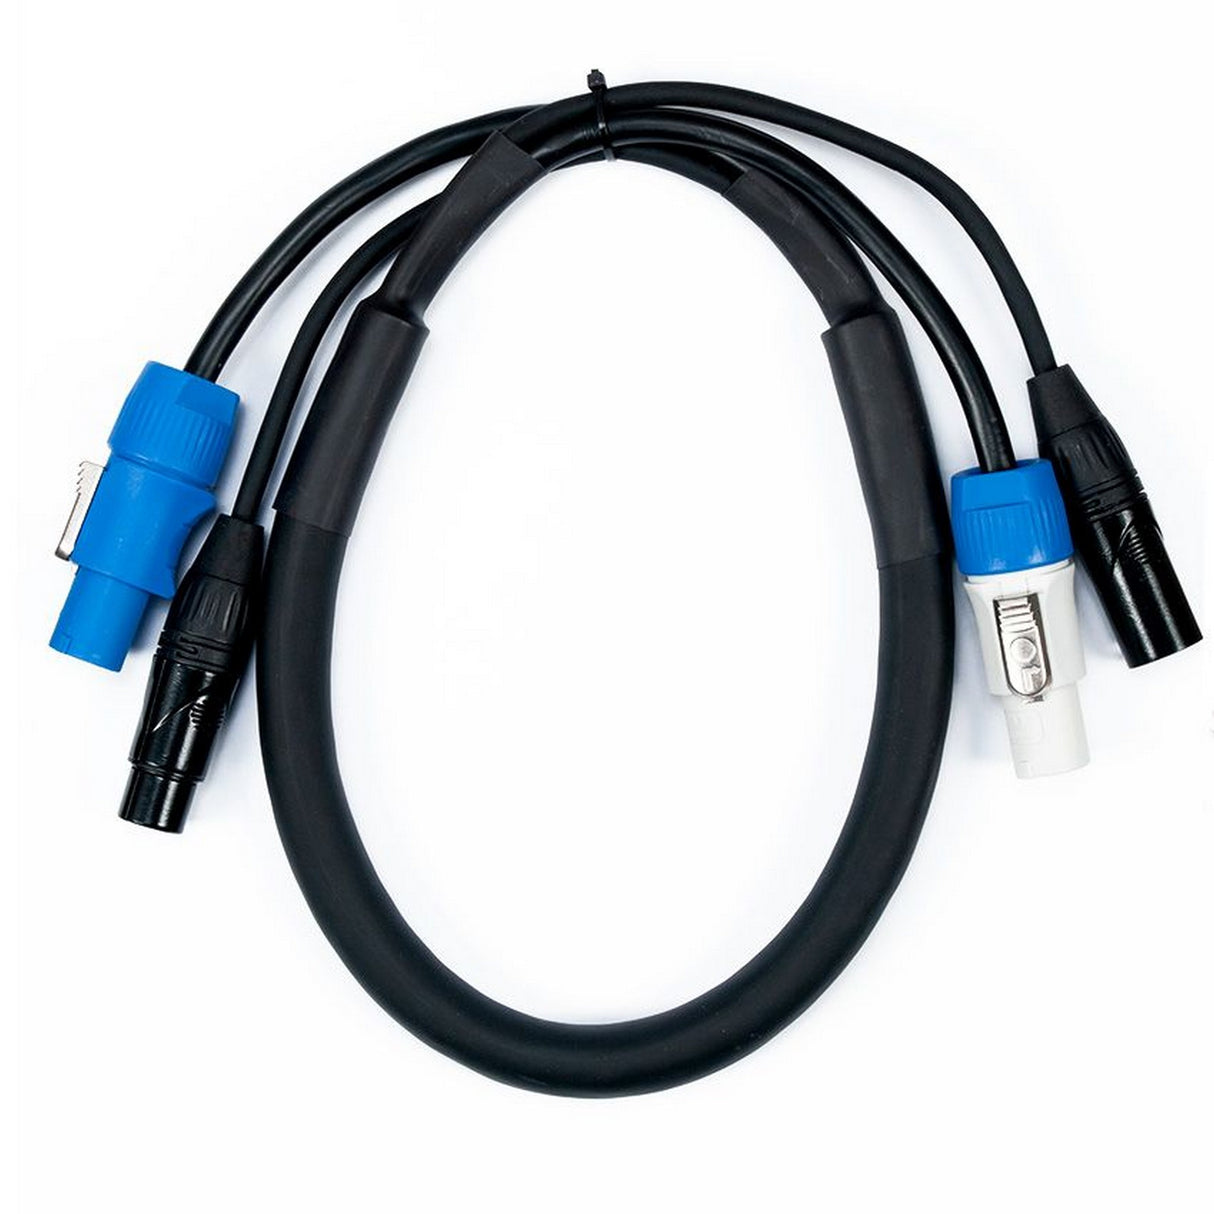 Accu Cable AC3PPCON3 3-Pin XLR DMX Locking Power Link Cable, 3-Feet